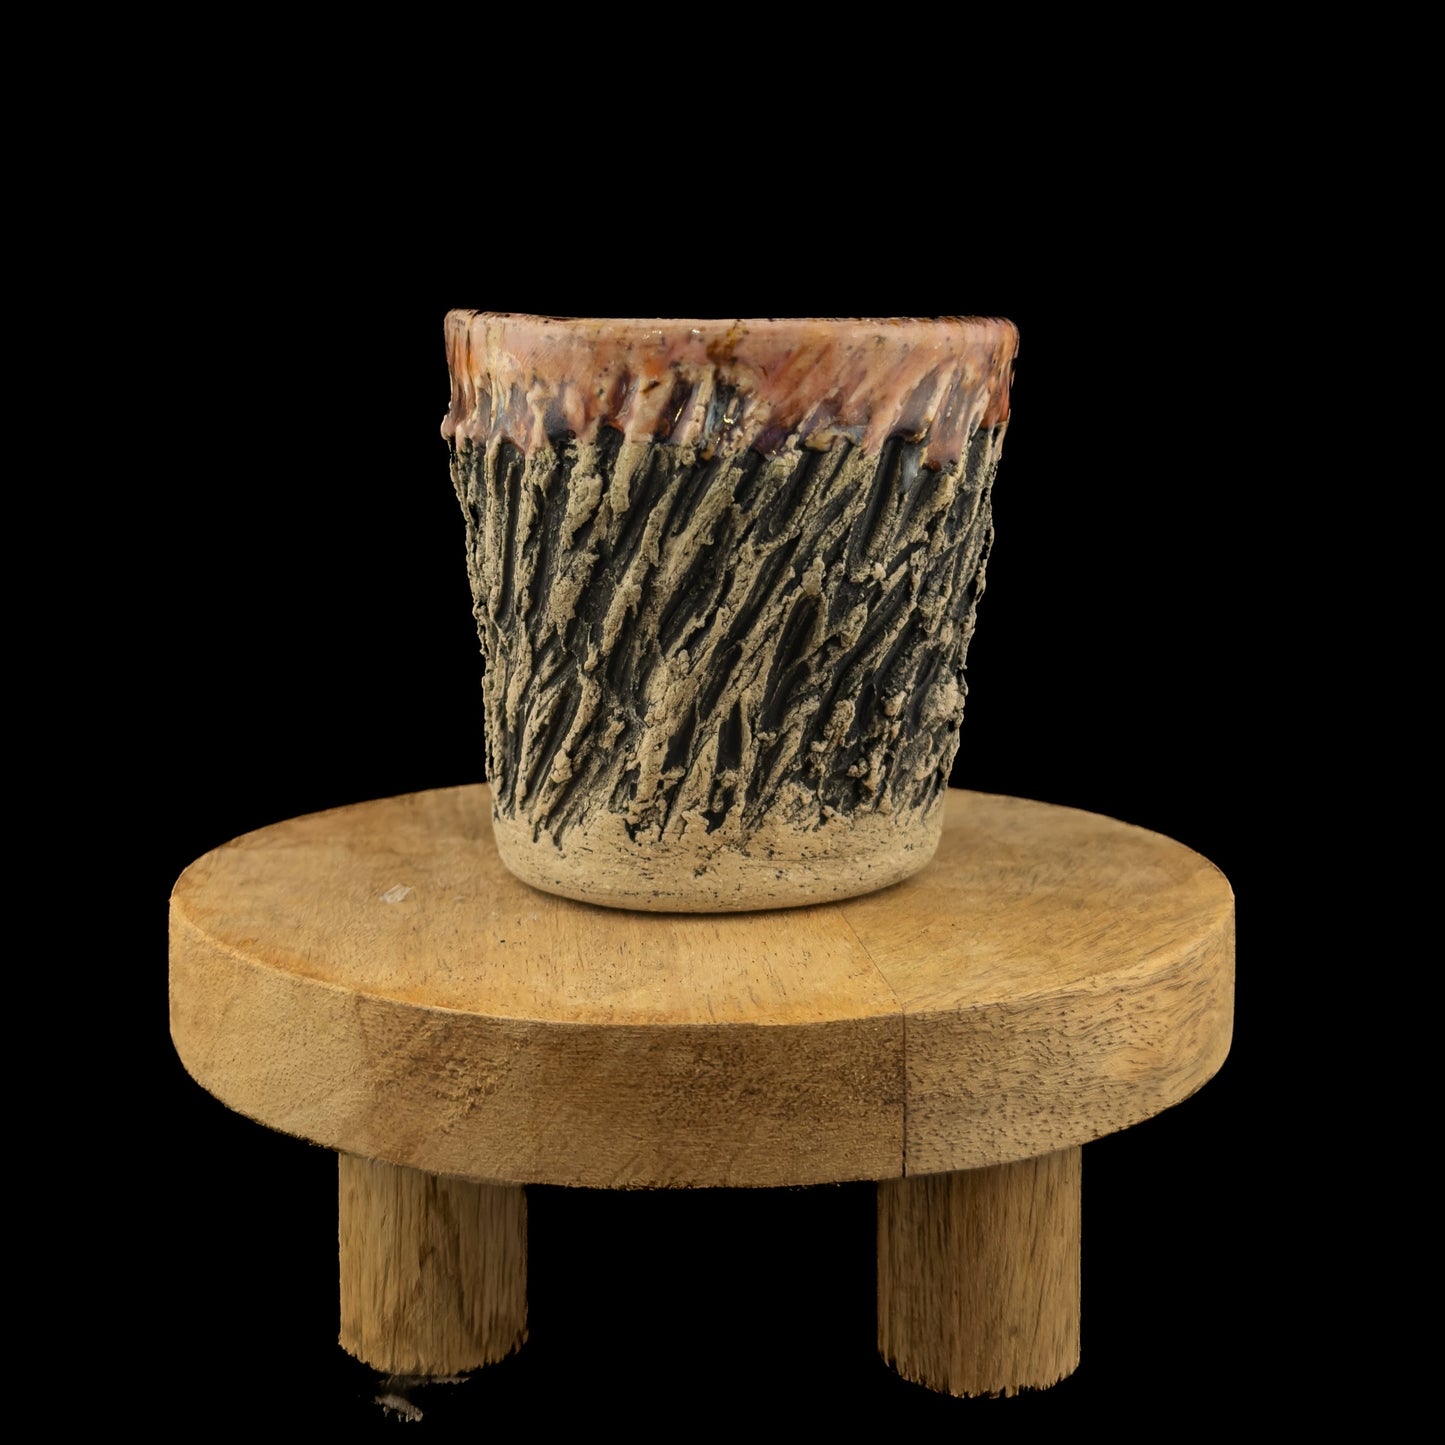 Textured Coffee Mug #031